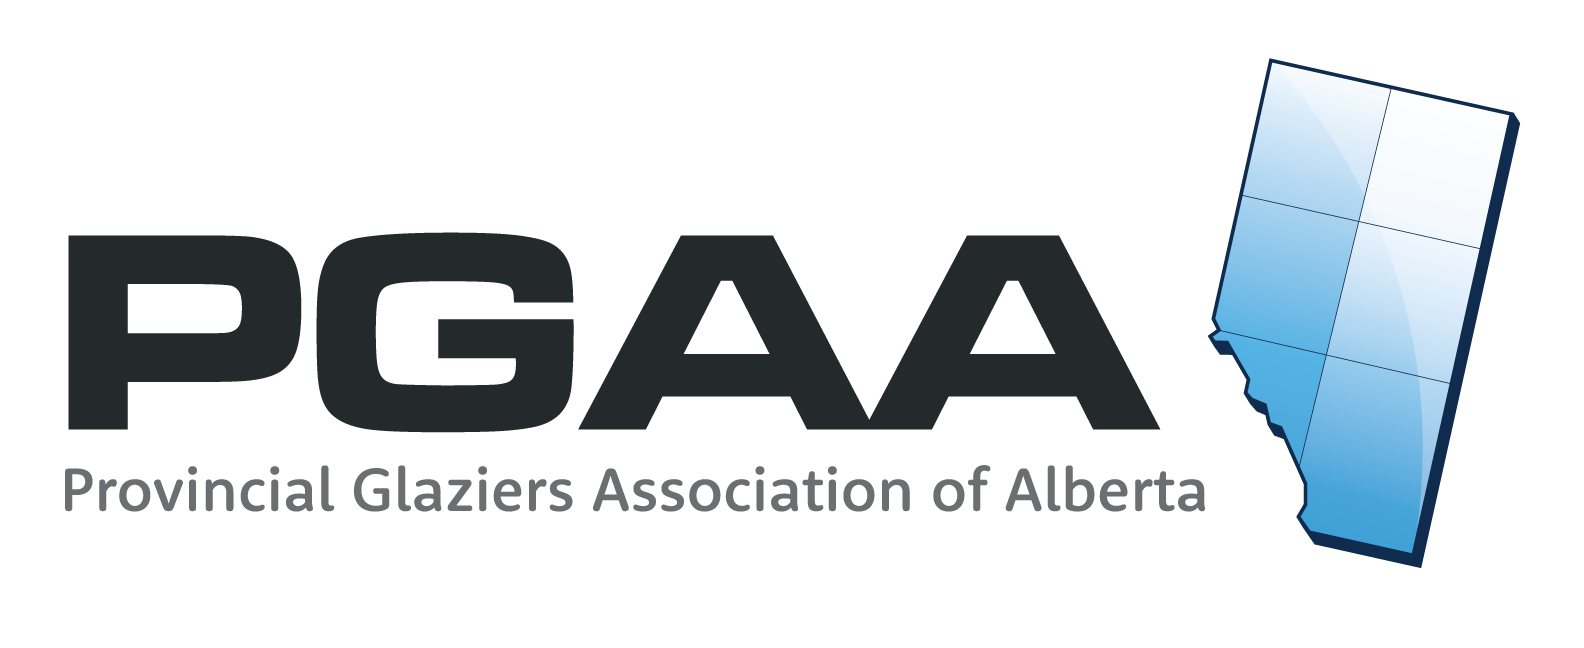 Provincial Glaziers Association of Alberta Logo